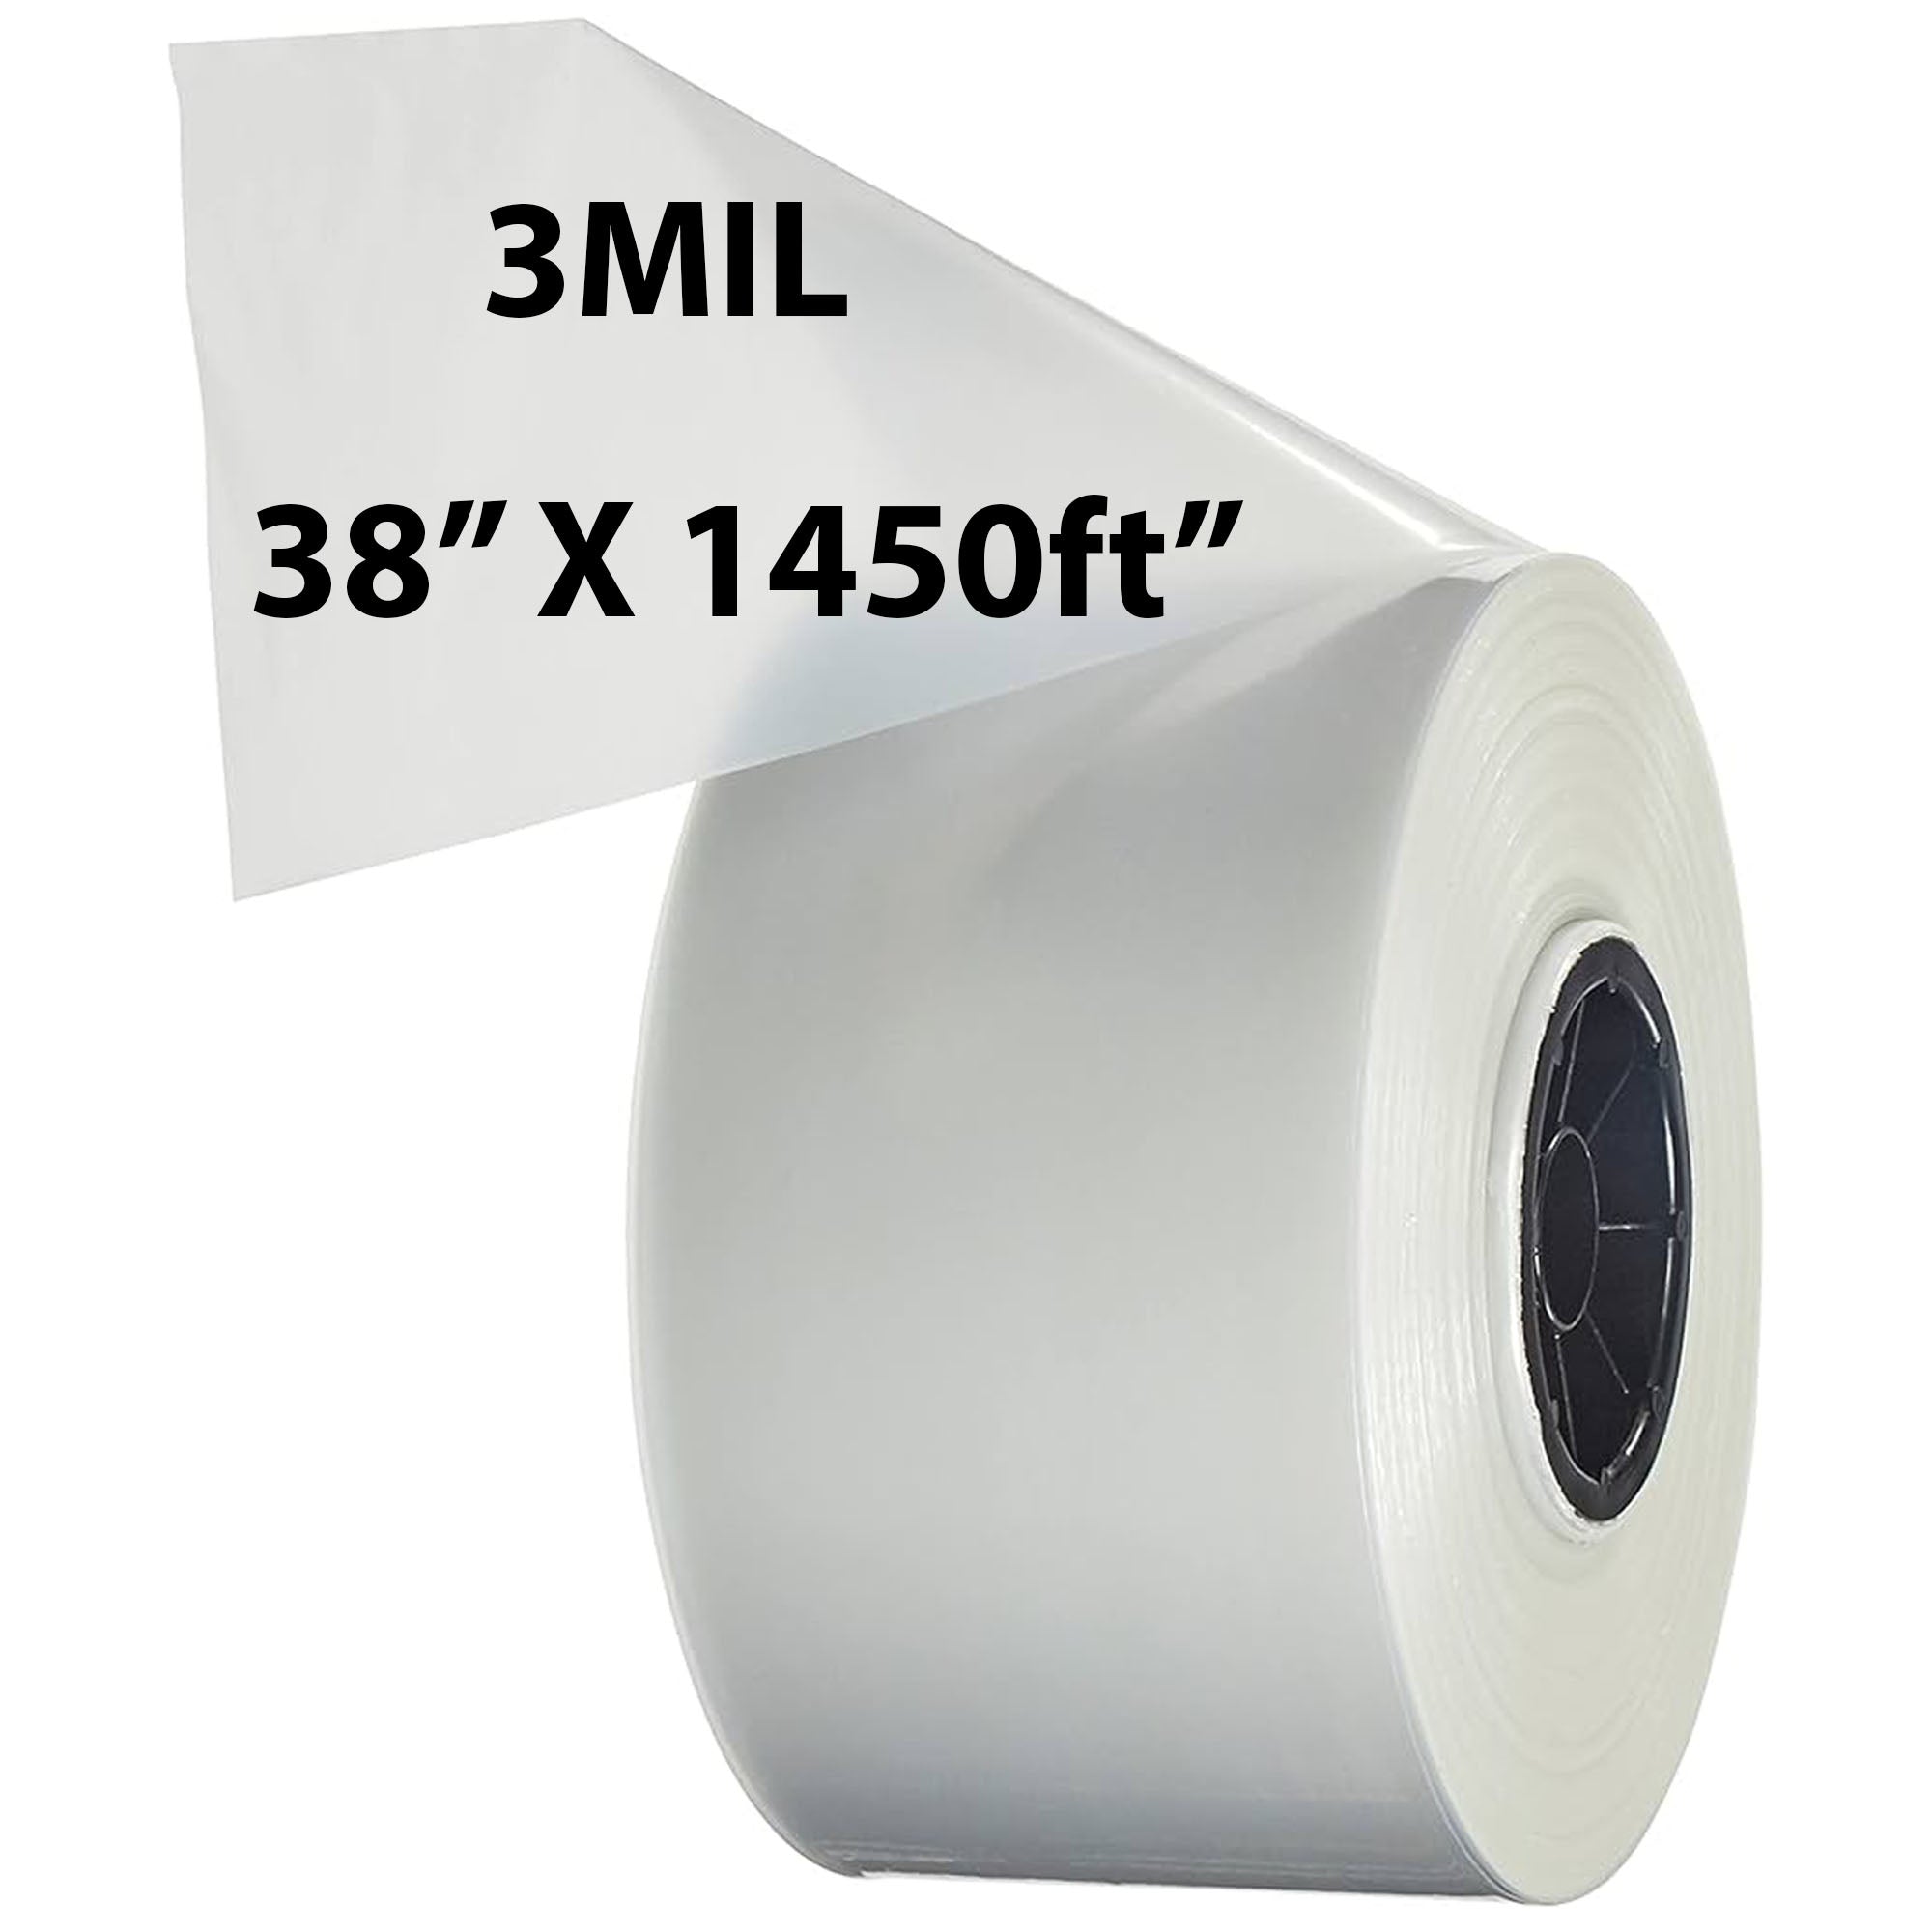 Food Grade Poly Tubing Roll Bags 3Mil 38x1450ft- Impulse Heat Sealer